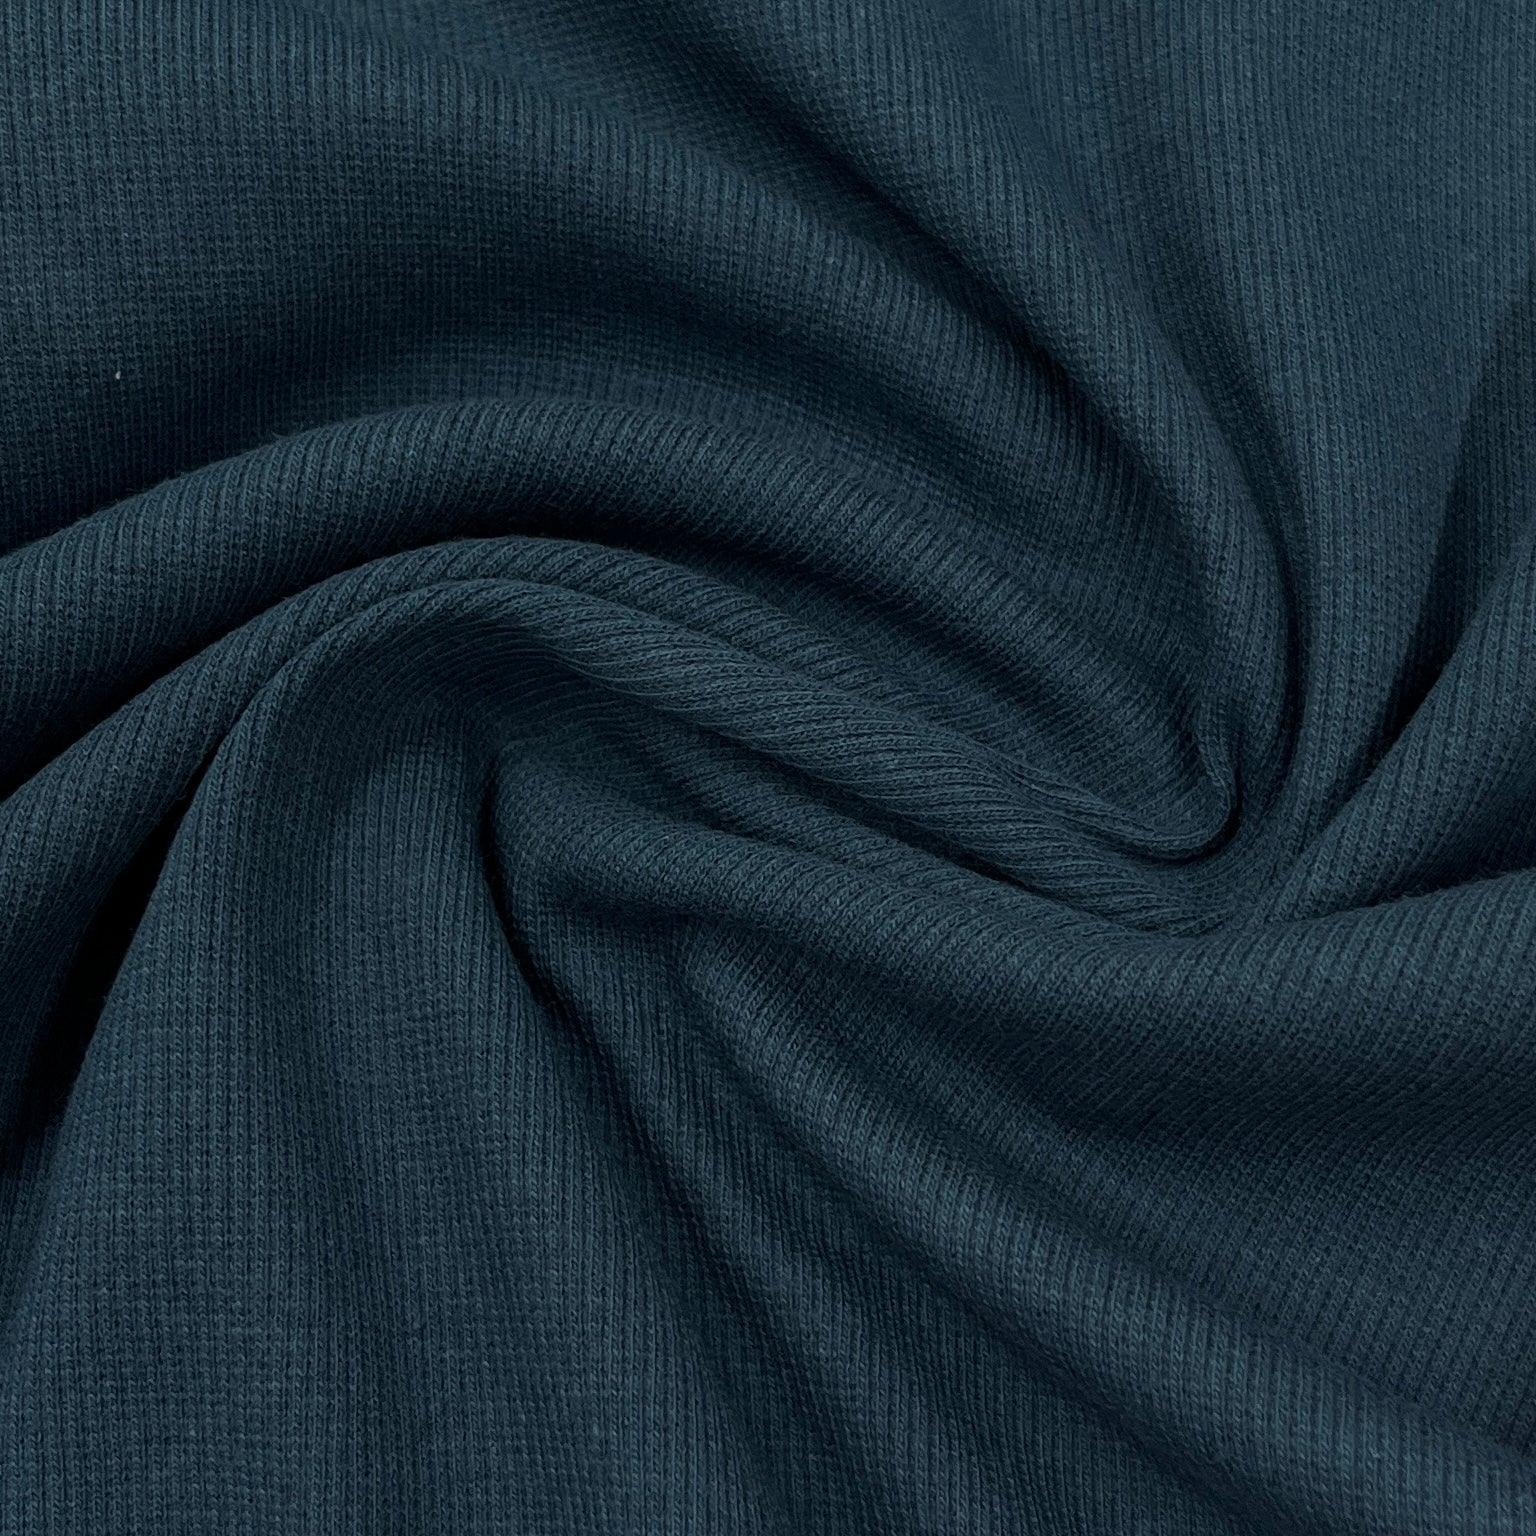 Ultramarine 2x2 Organic Cotton Rib Knit Fabric - Nature's Fabrics